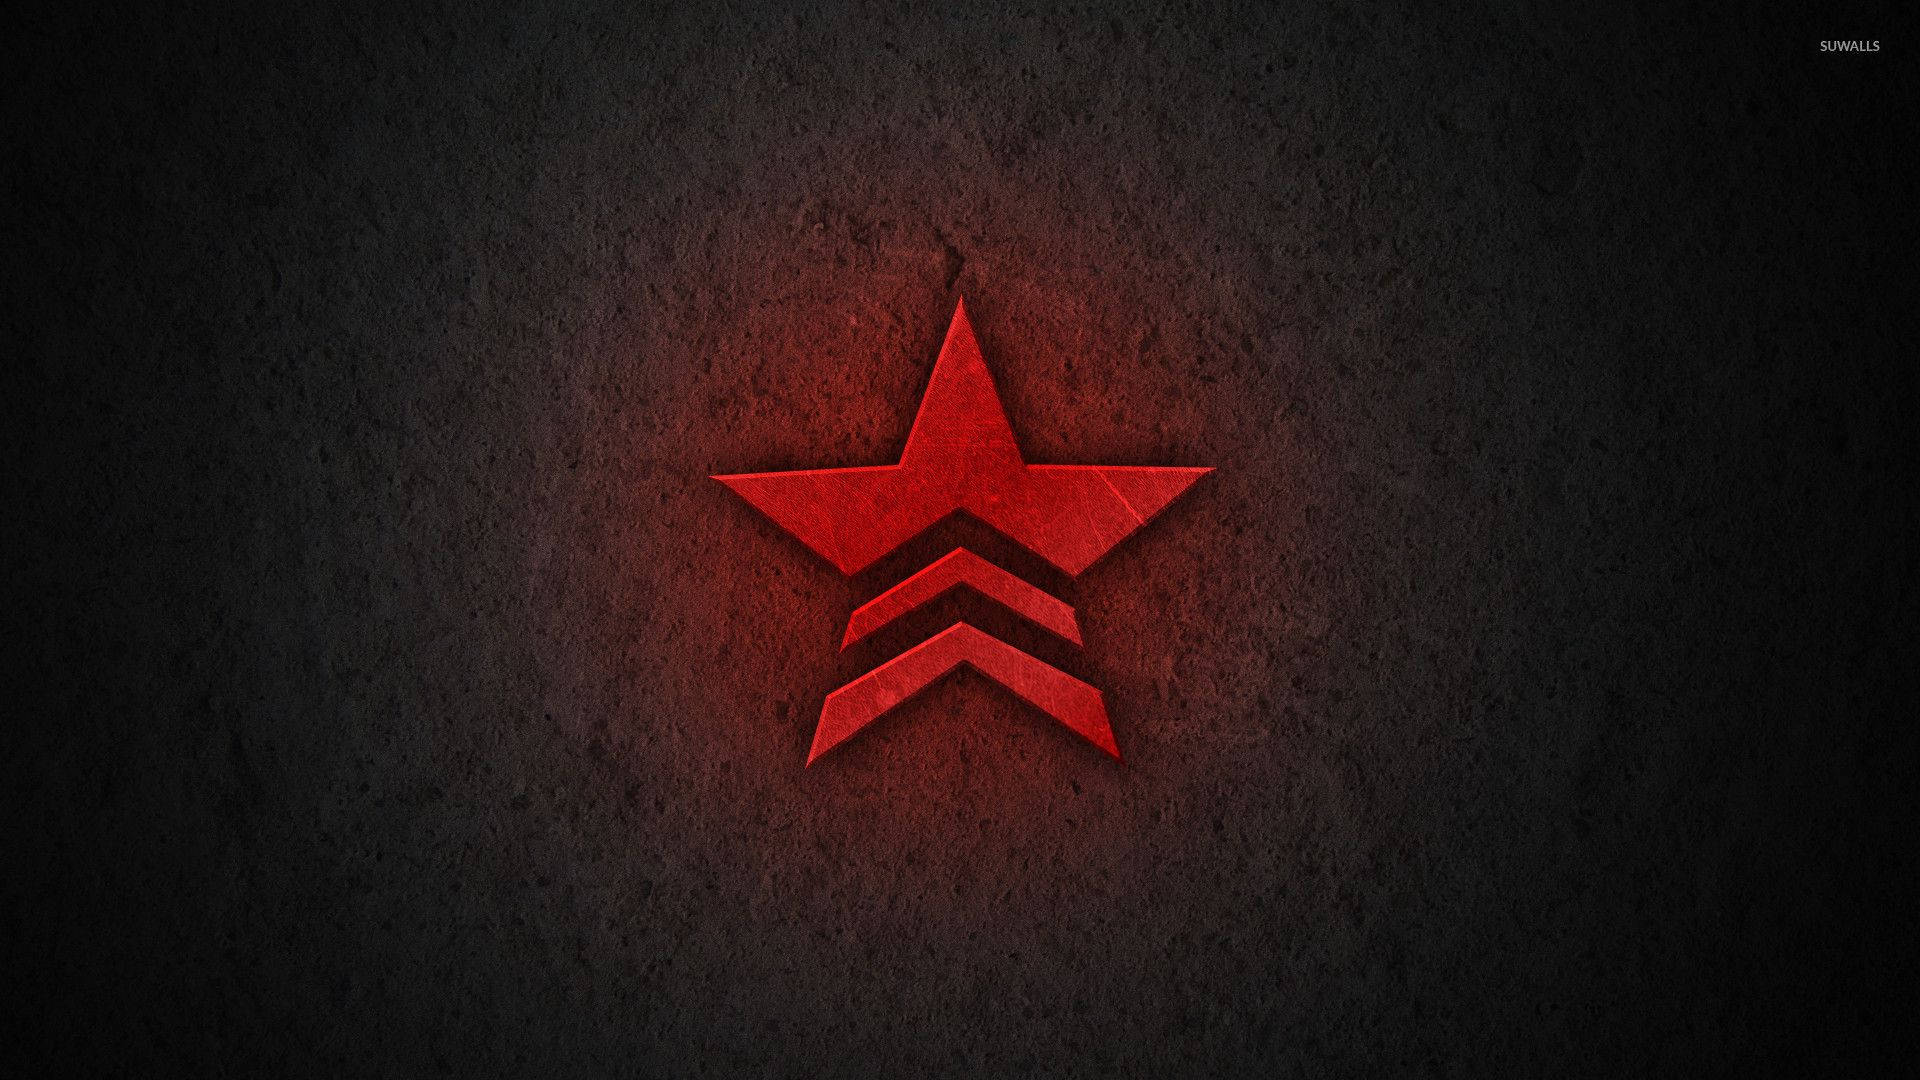 Vibrant Red Star, Symbol Of Renegade